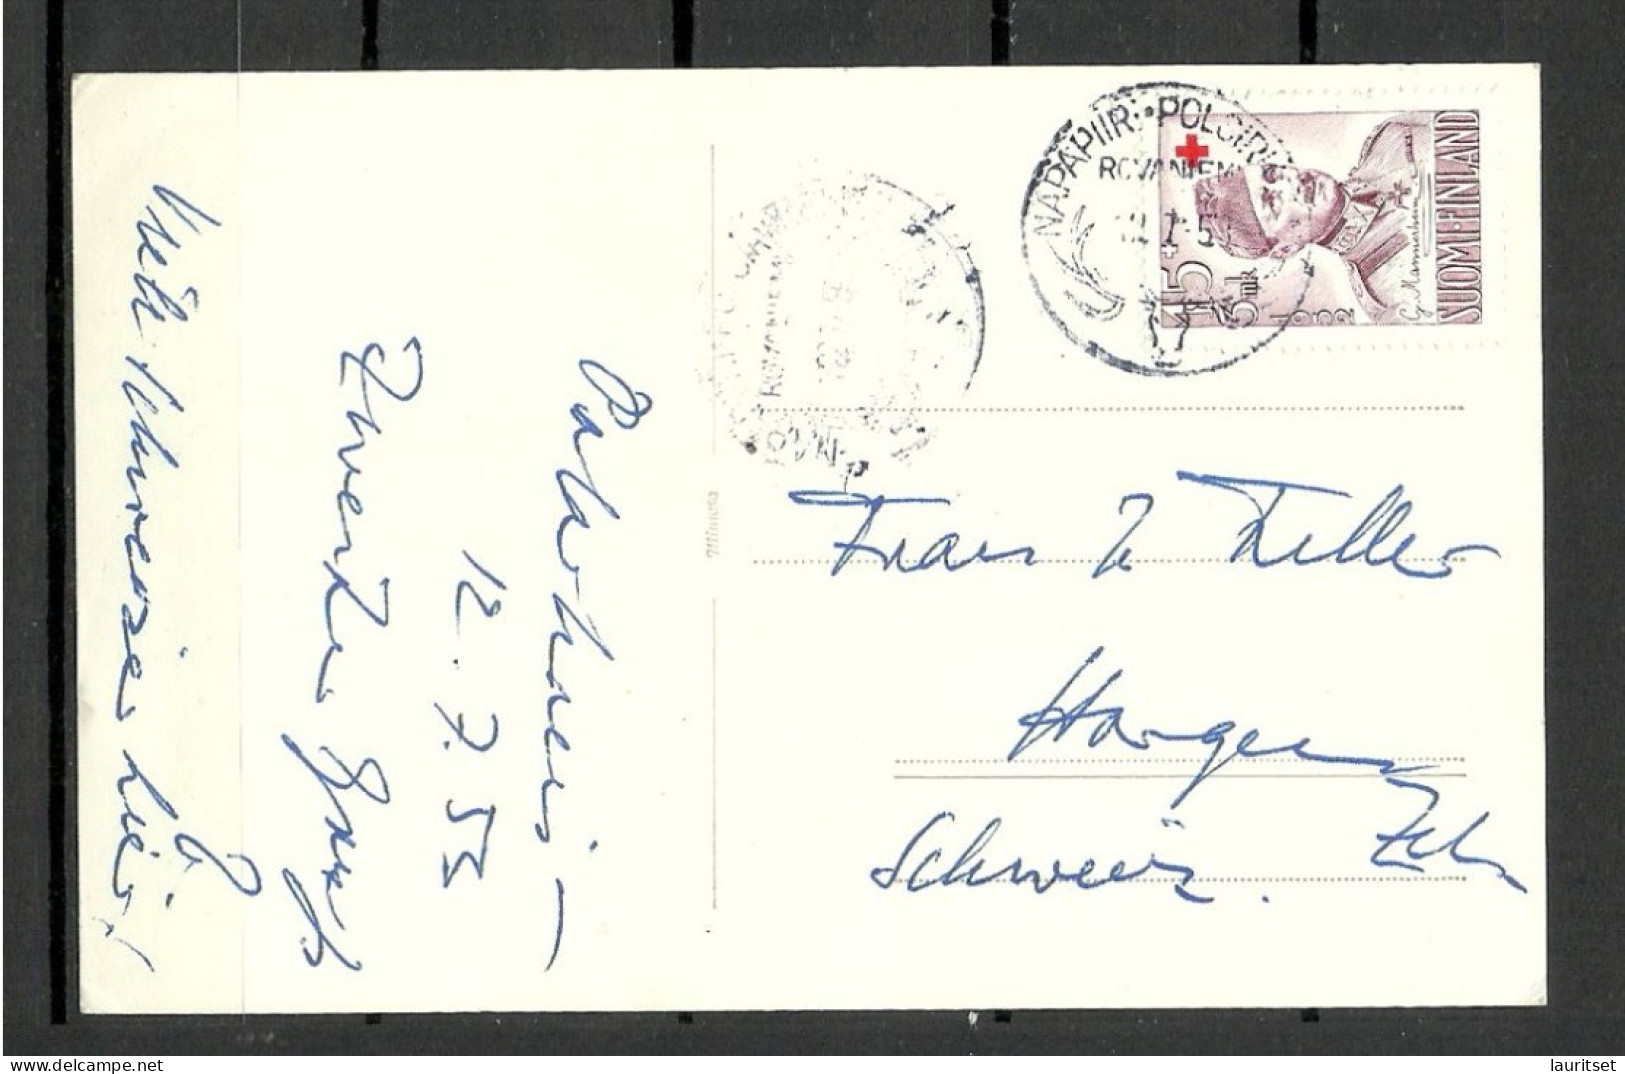 FINNLAND Finland 1953 O Napapiiri Polar Circle Rovaniemi Post Card Sent To Switzerland Michel 408 As Single - Briefe U. Dokumente